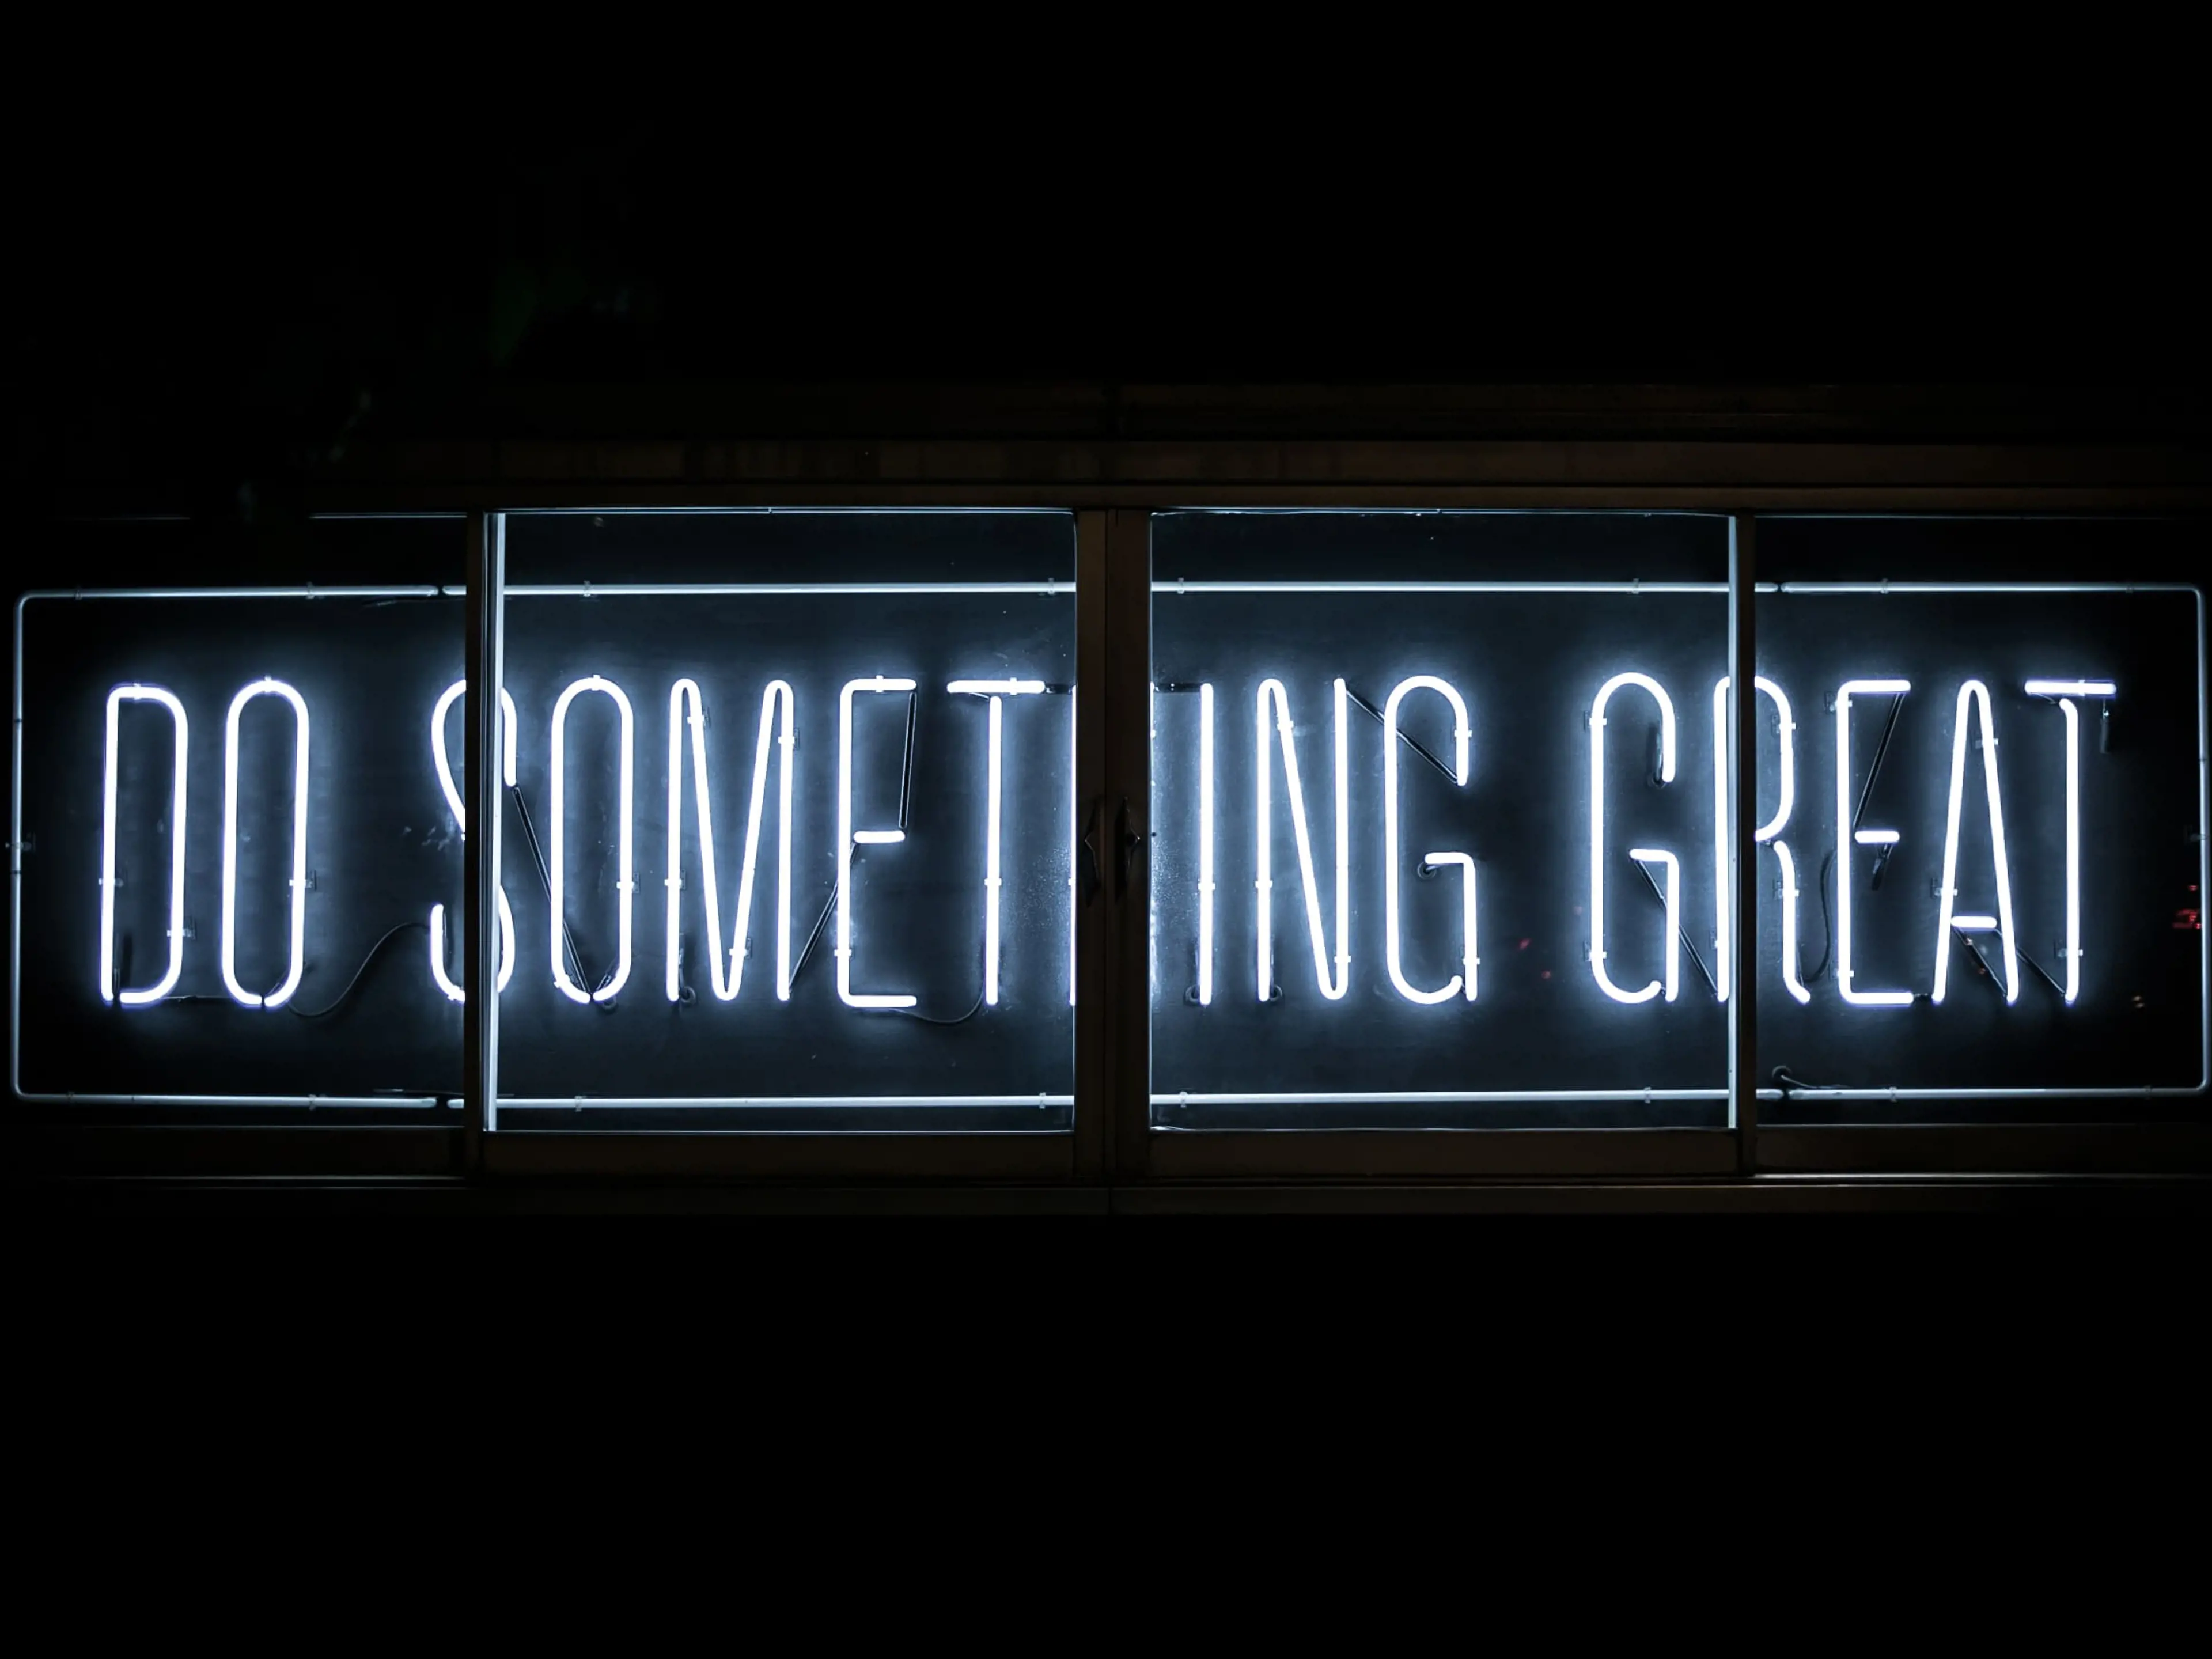 "Do something great" written in neon lights